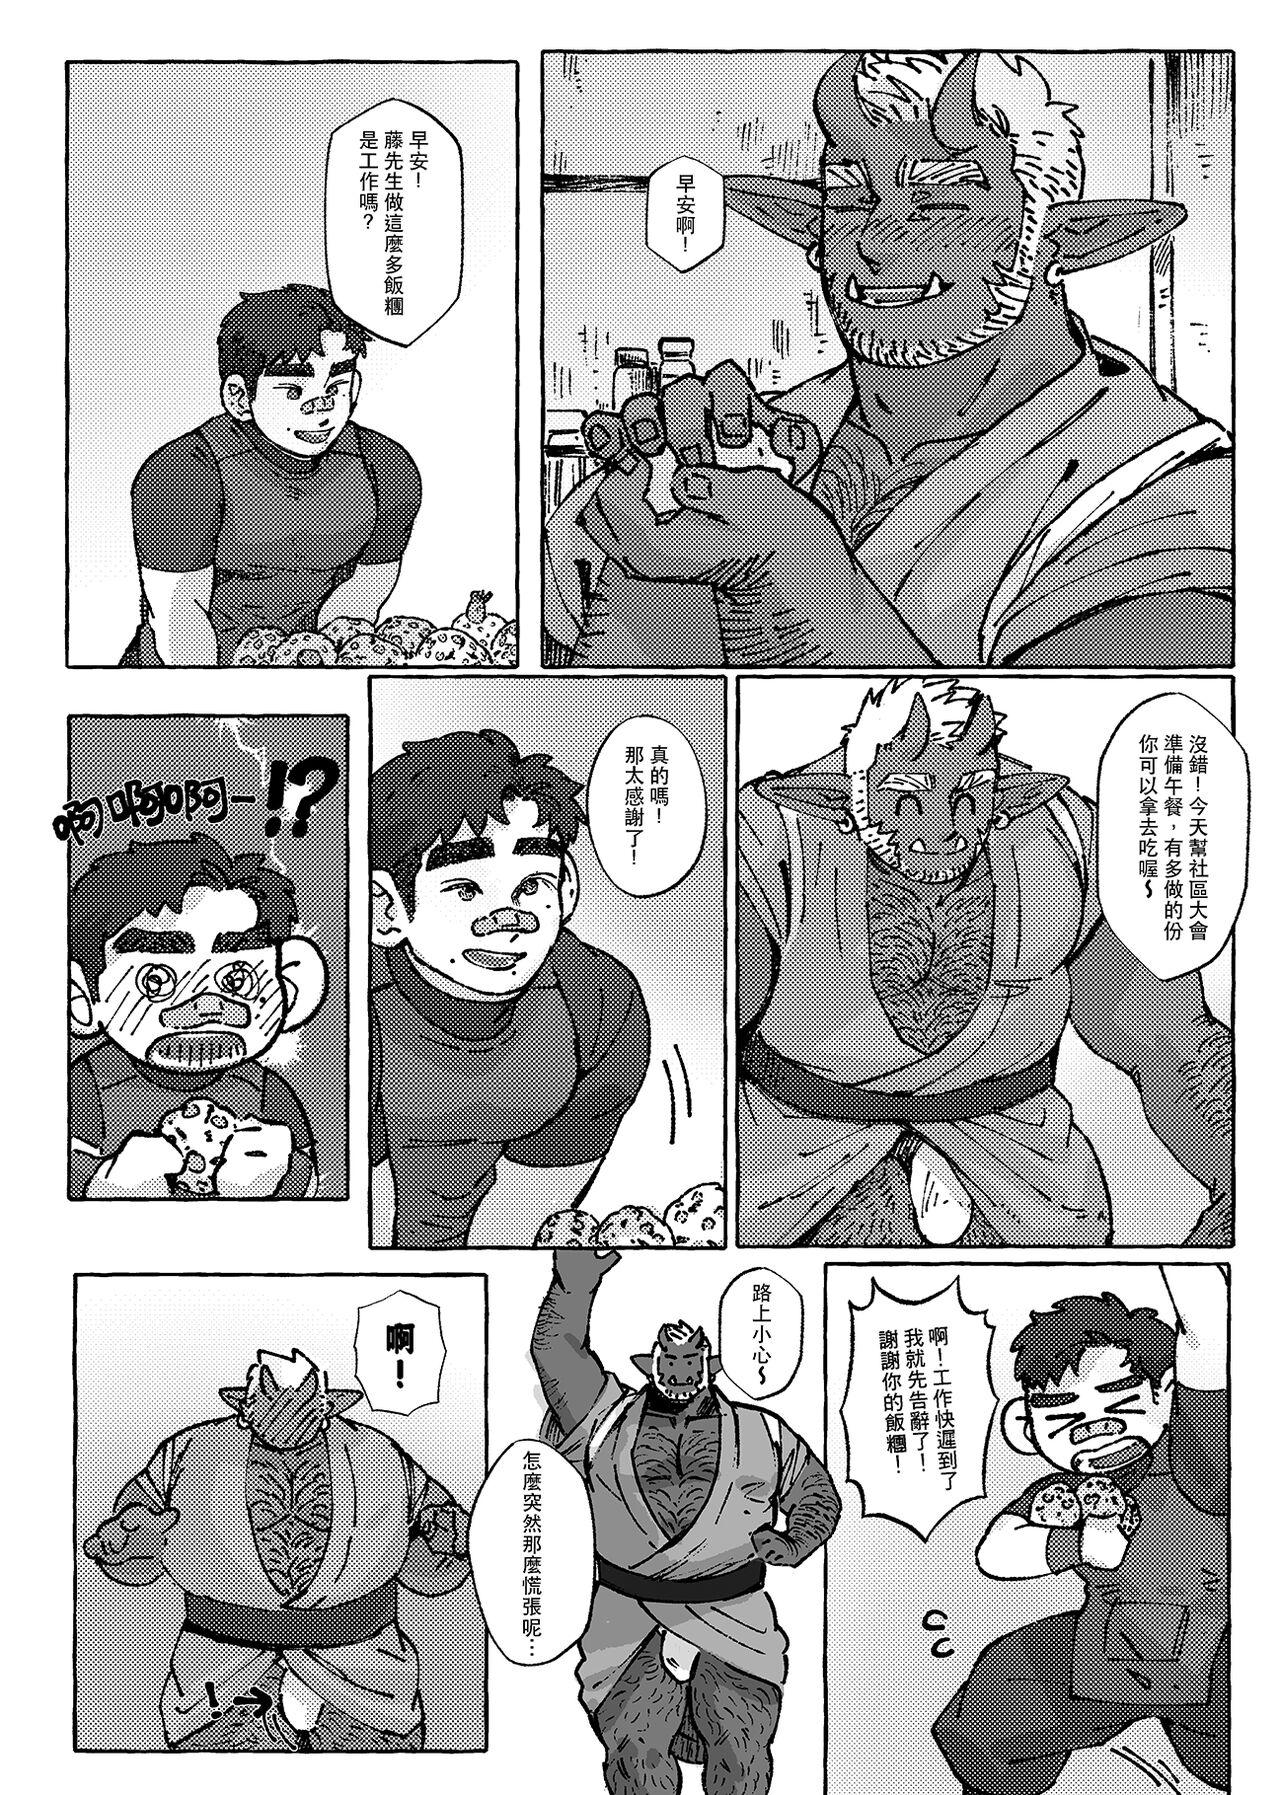 Cbt Shanshan Kuo - The Fuji! Full Book (Chinese Version) 松竹梅與藤｜繁中全書 Gay Broken - Page 7